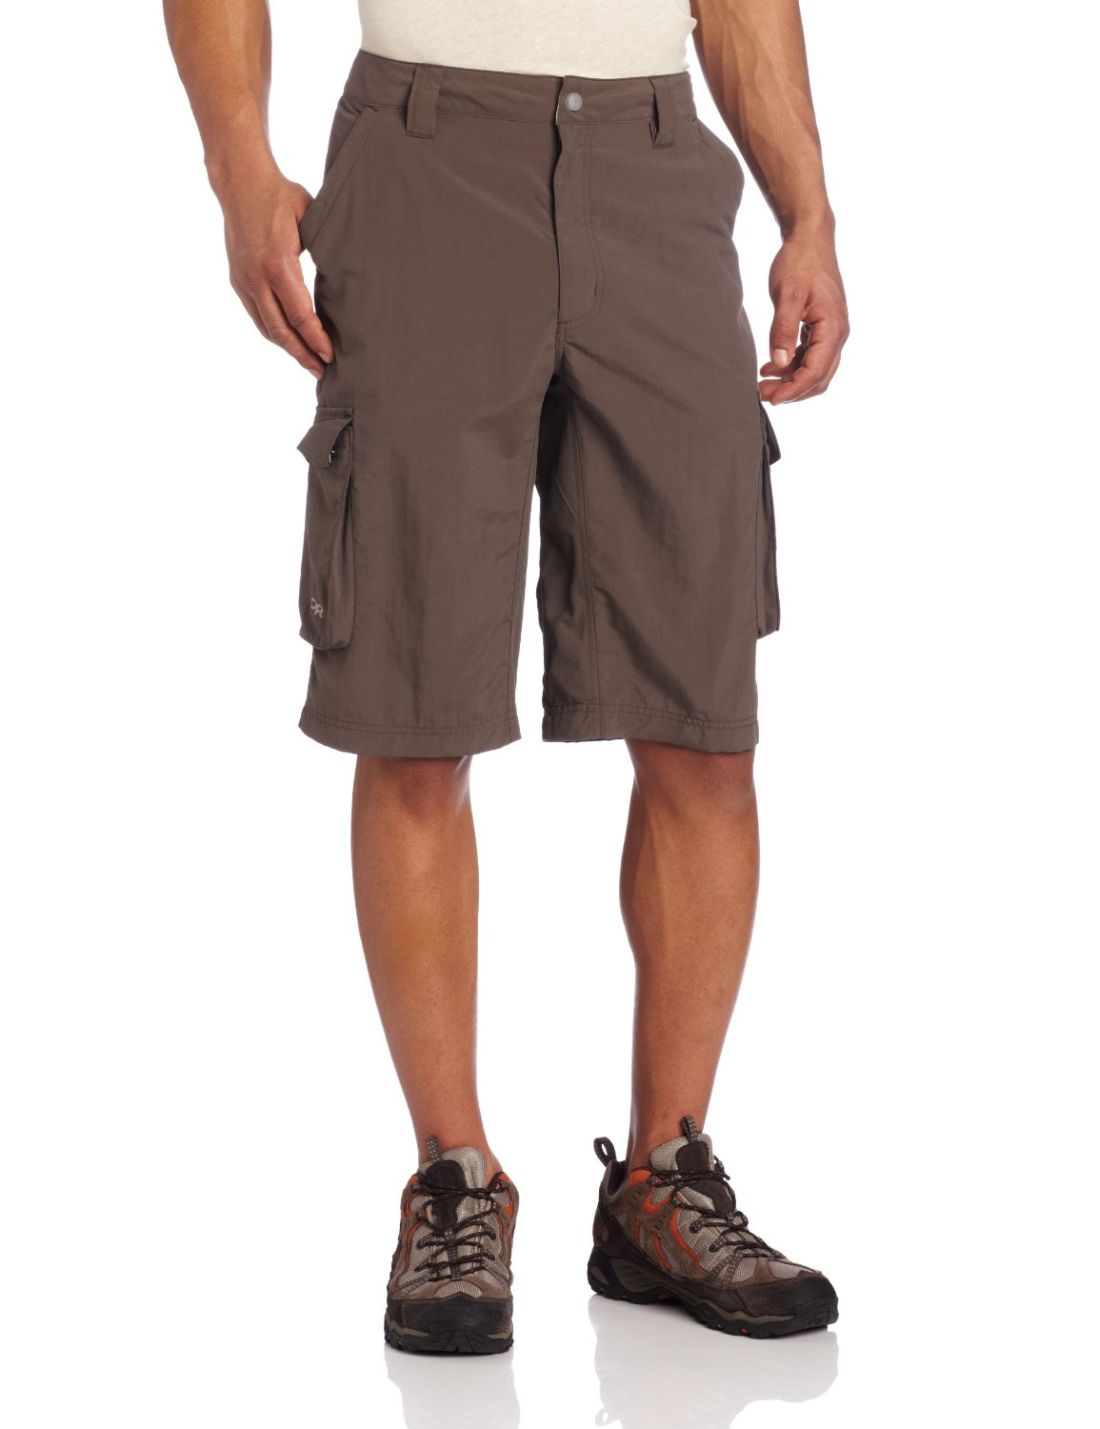 Outdoor research - Шорты мужские Equinox Cargo Shorts